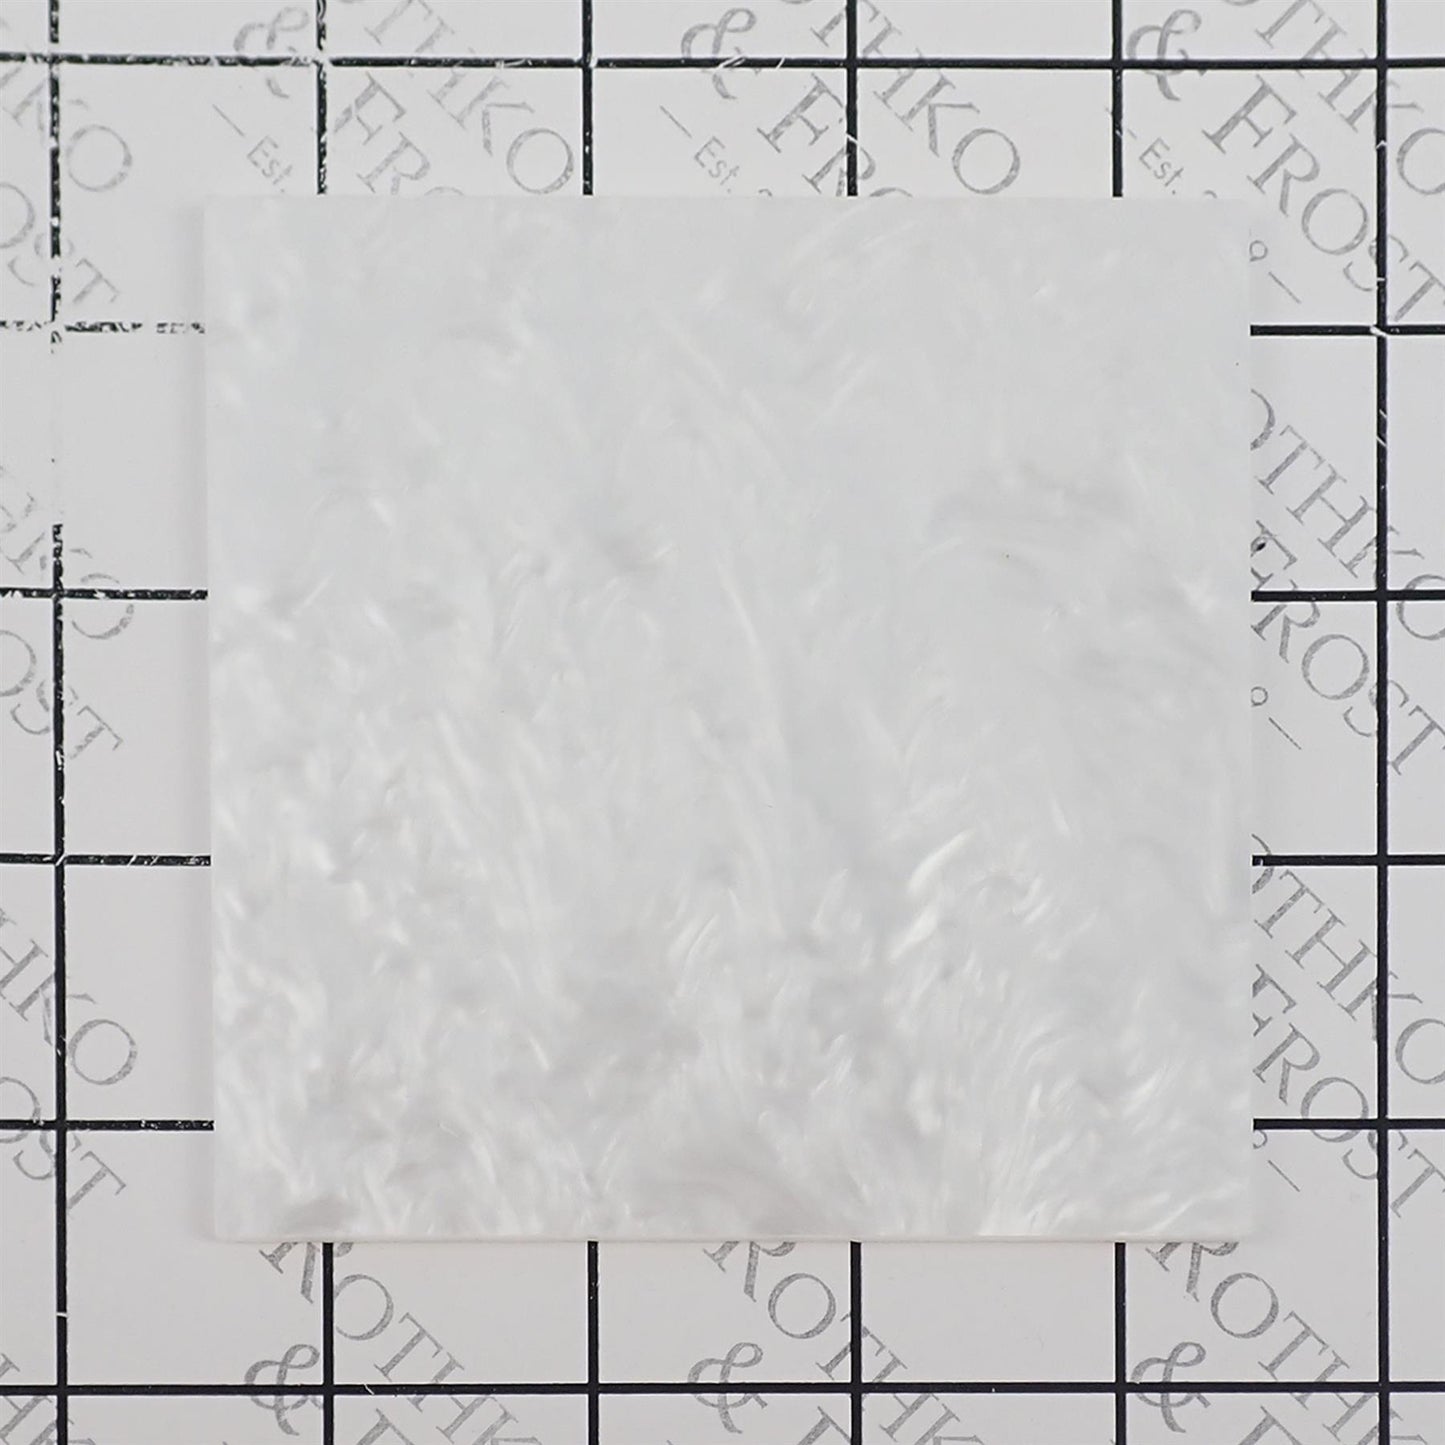 Incudo White Pearl Acrylic Sheet - 300x200x3mm (11.8x7.87x0.12")